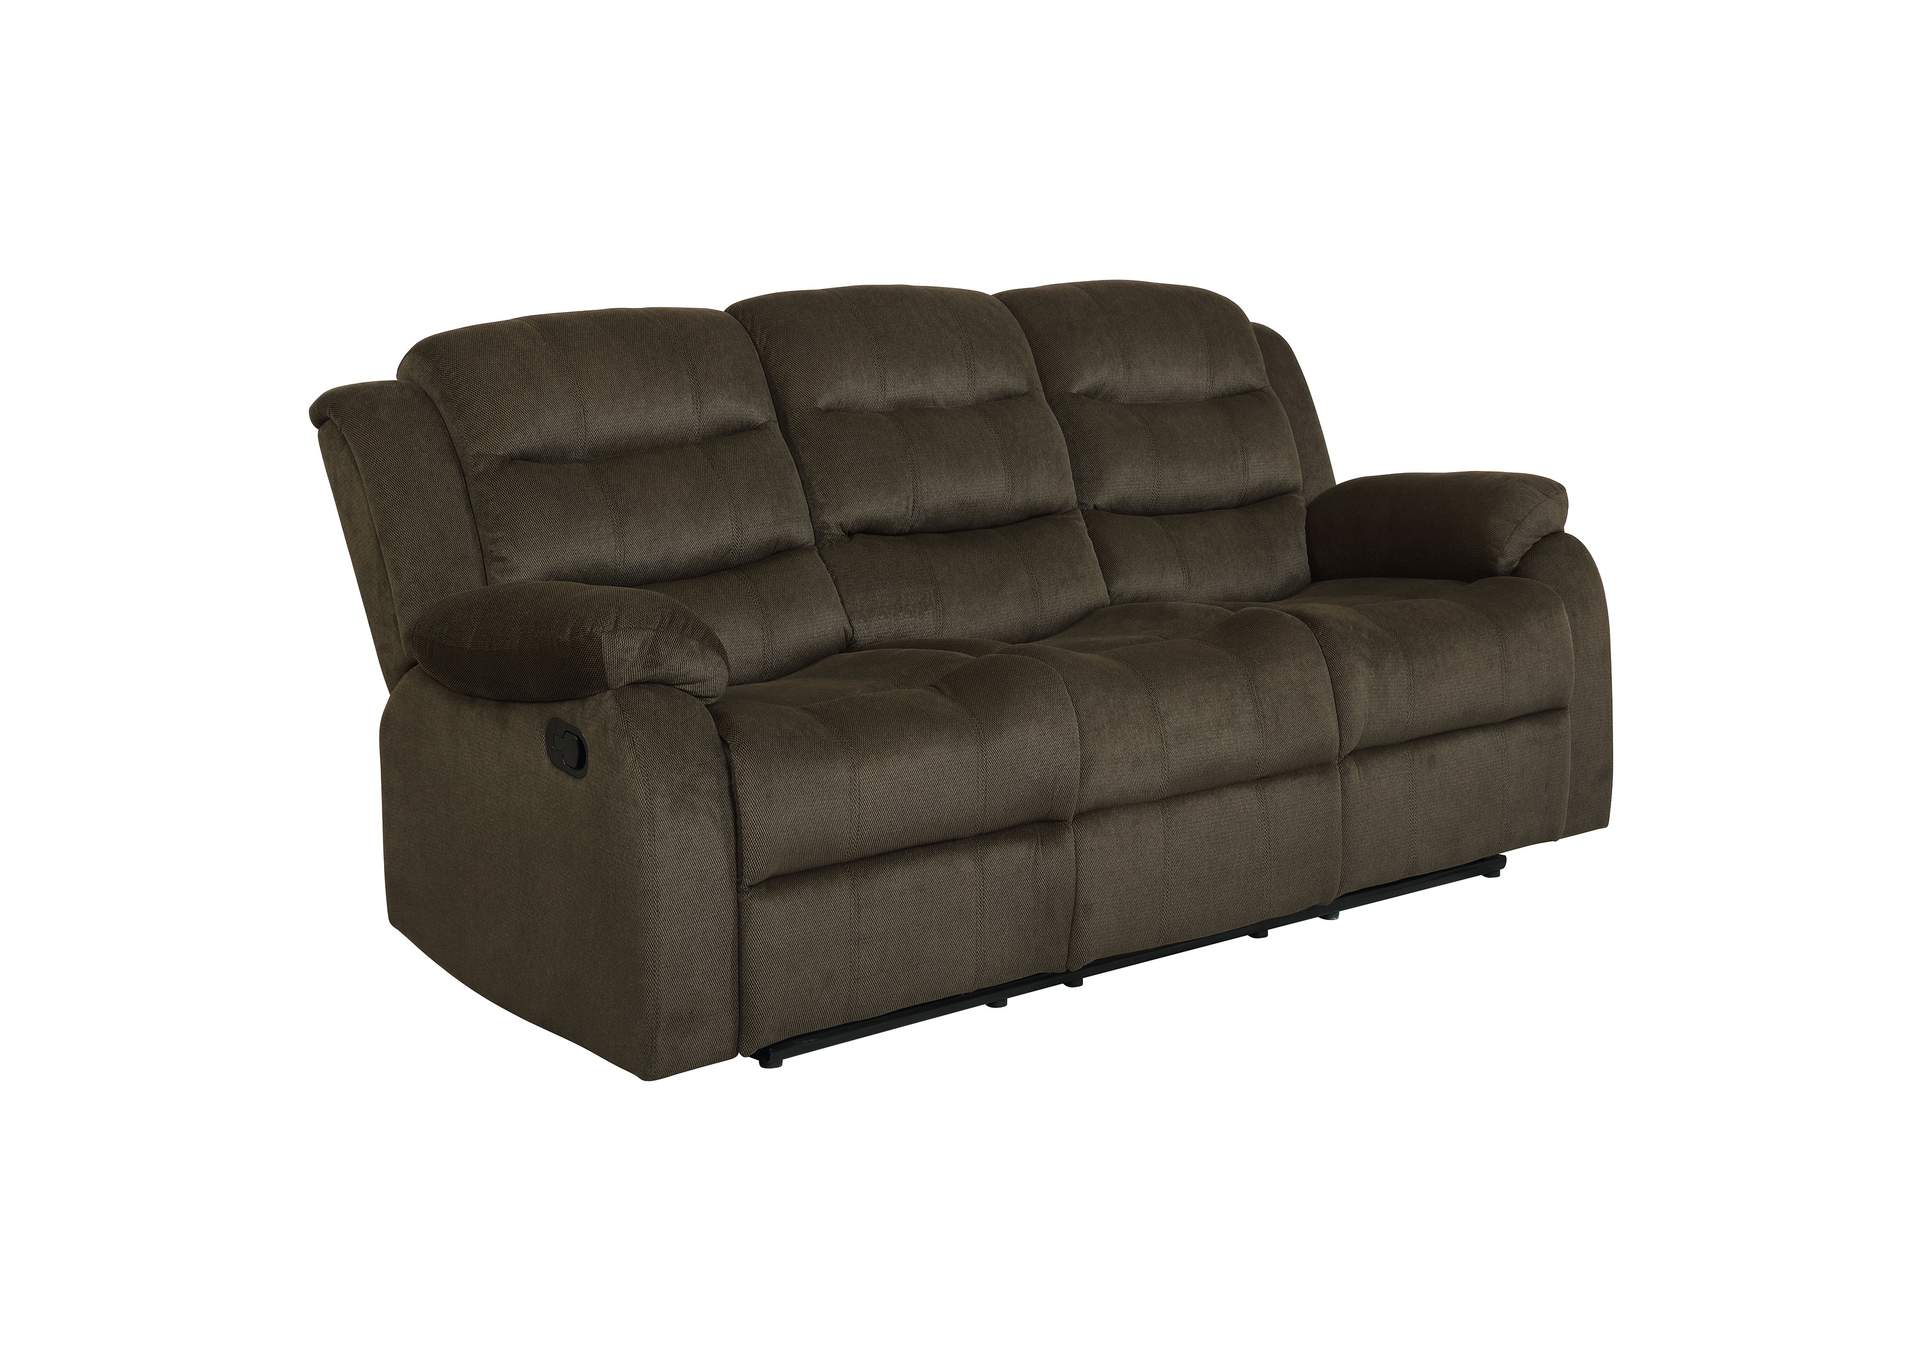 Rodman Pillow Top Arm Motion Sofa Olive Brown,Coaster Furniture